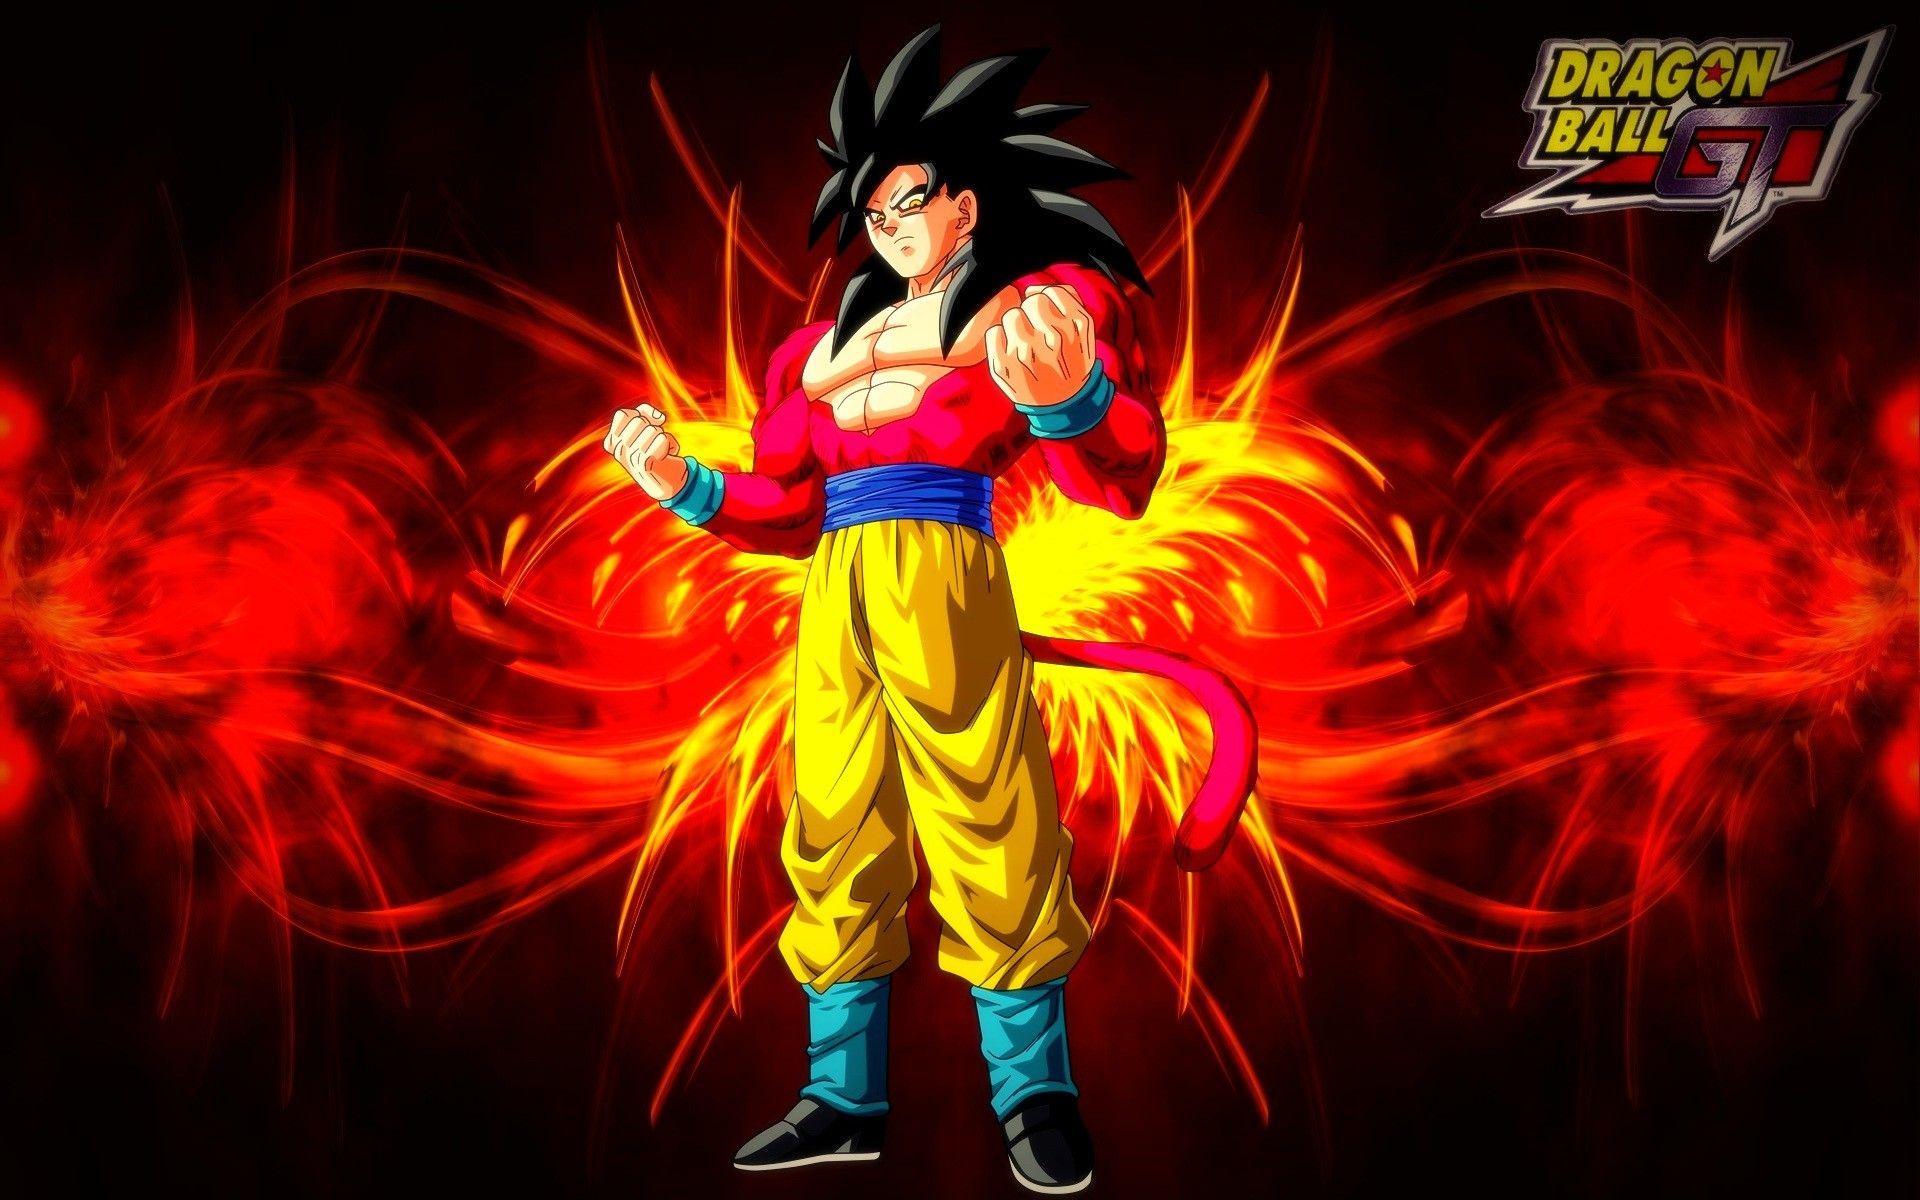 Super Saiyan 4 Goku and Vegeta Wallpaper